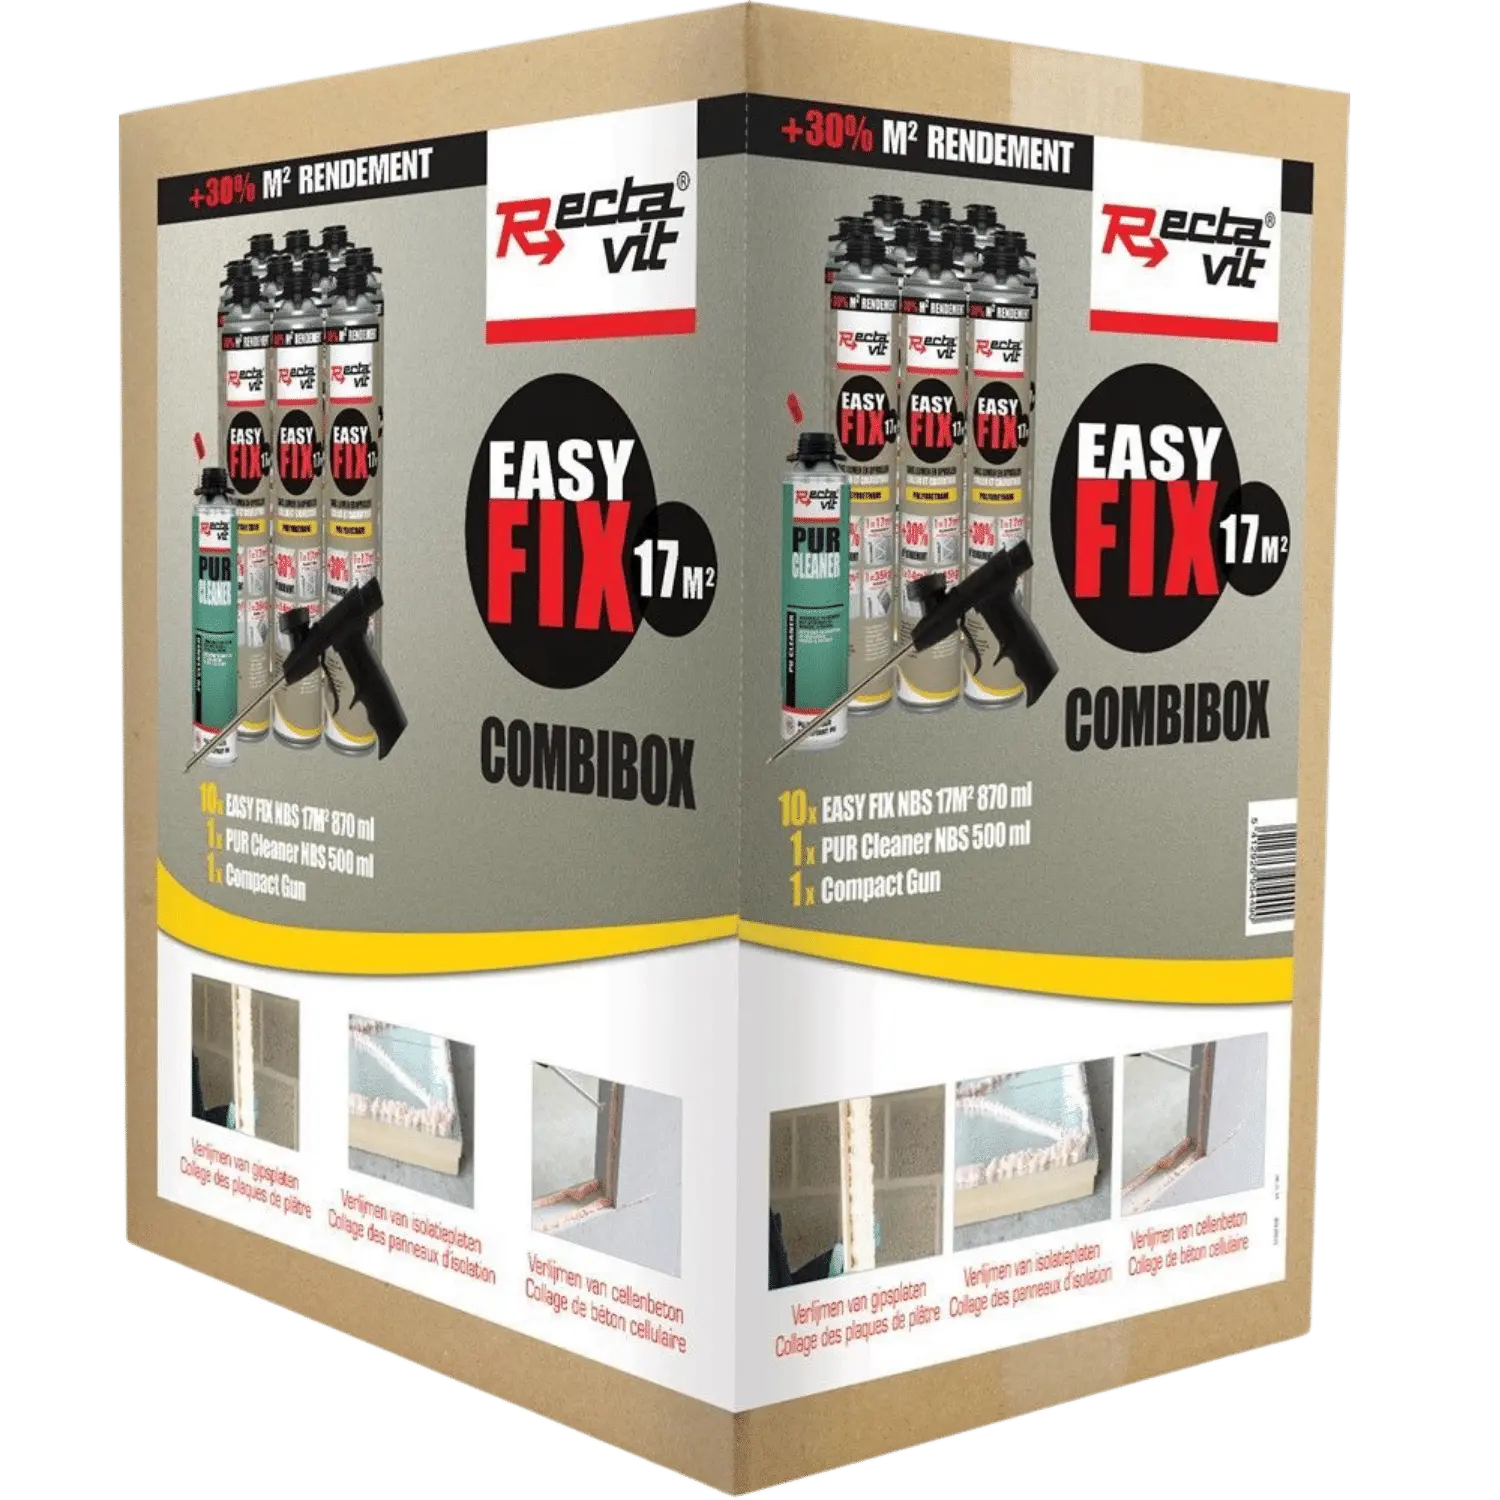 PU-Lijm Easy Fix Combibox (10 Easy Fix 17M² + Pistool + PUr Cleaner)